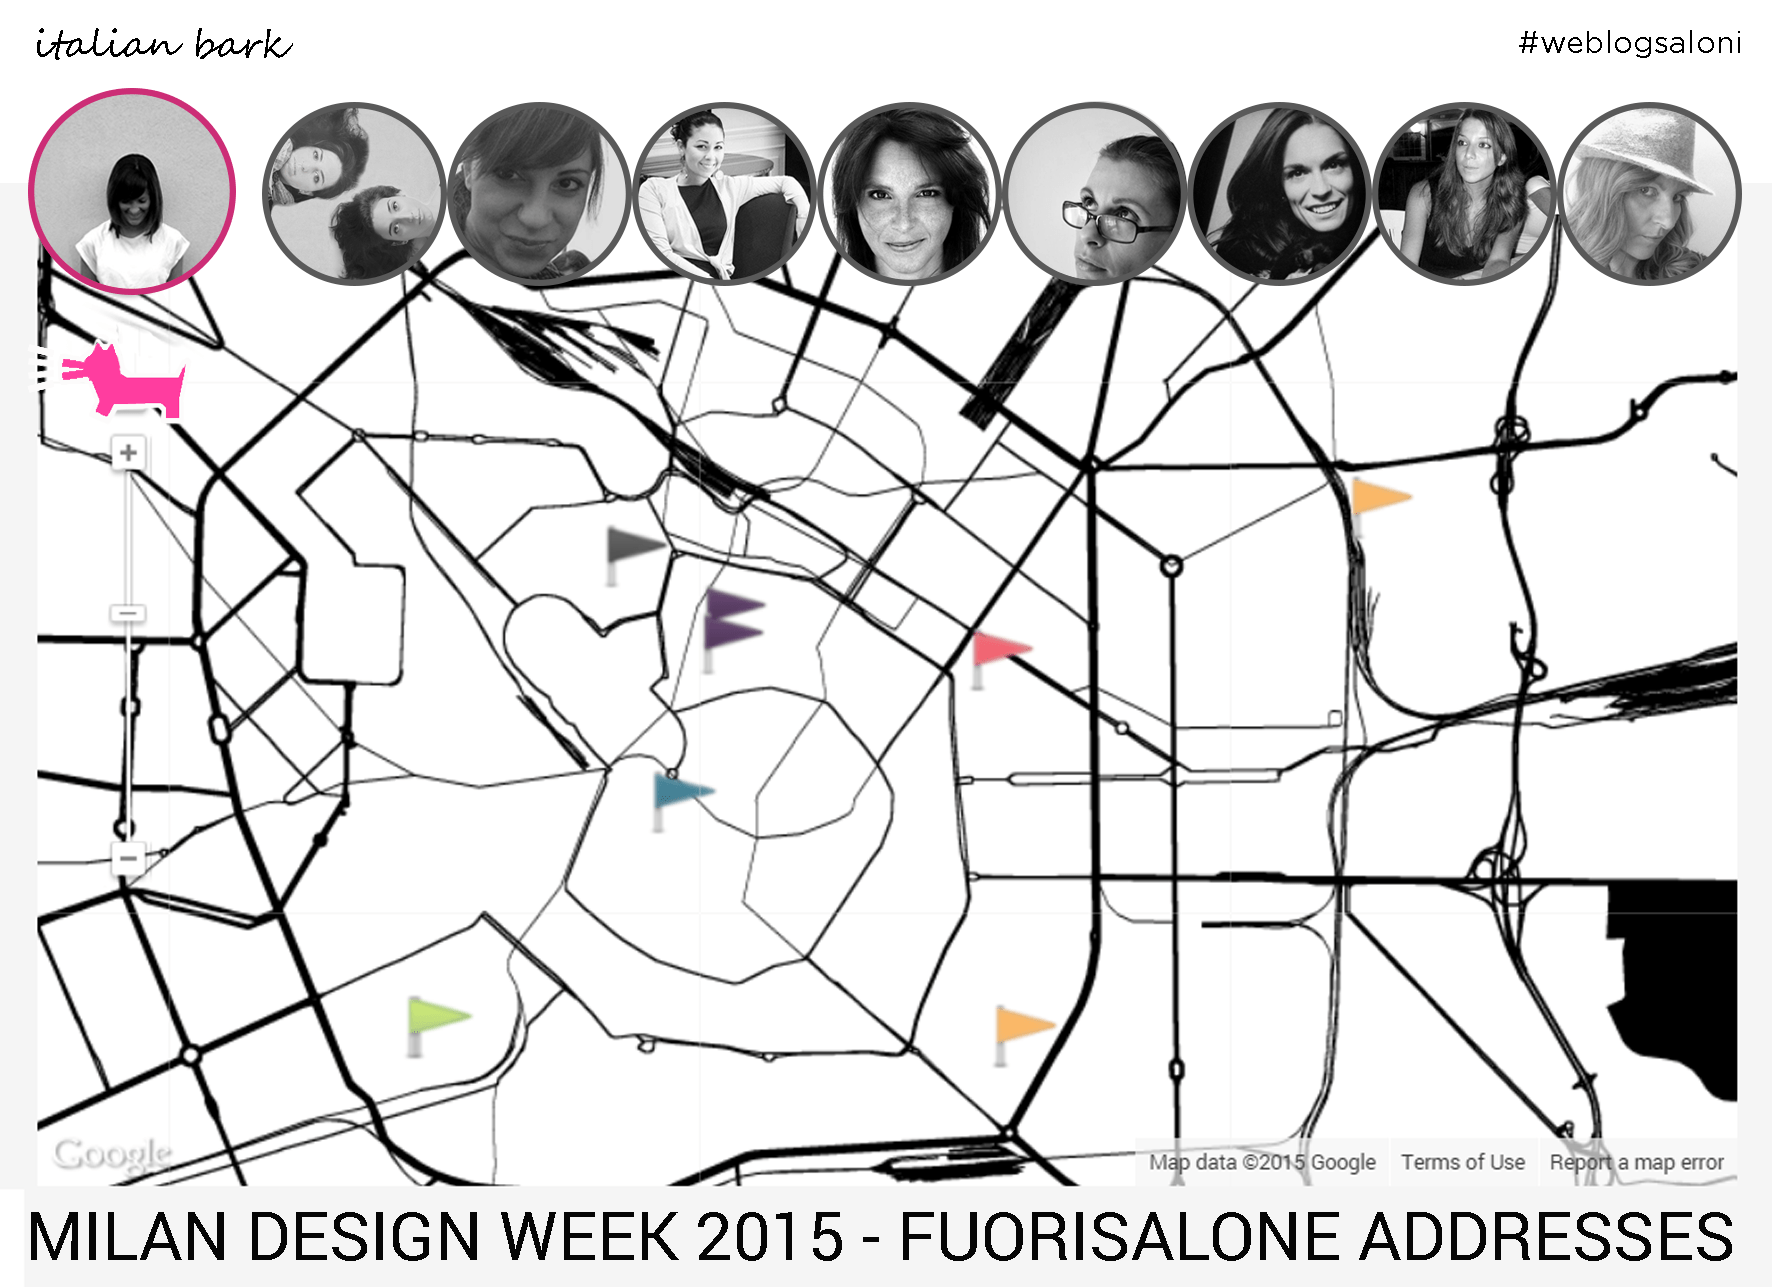 milan design week 2015 previews fuorisalone #weblogsaloni